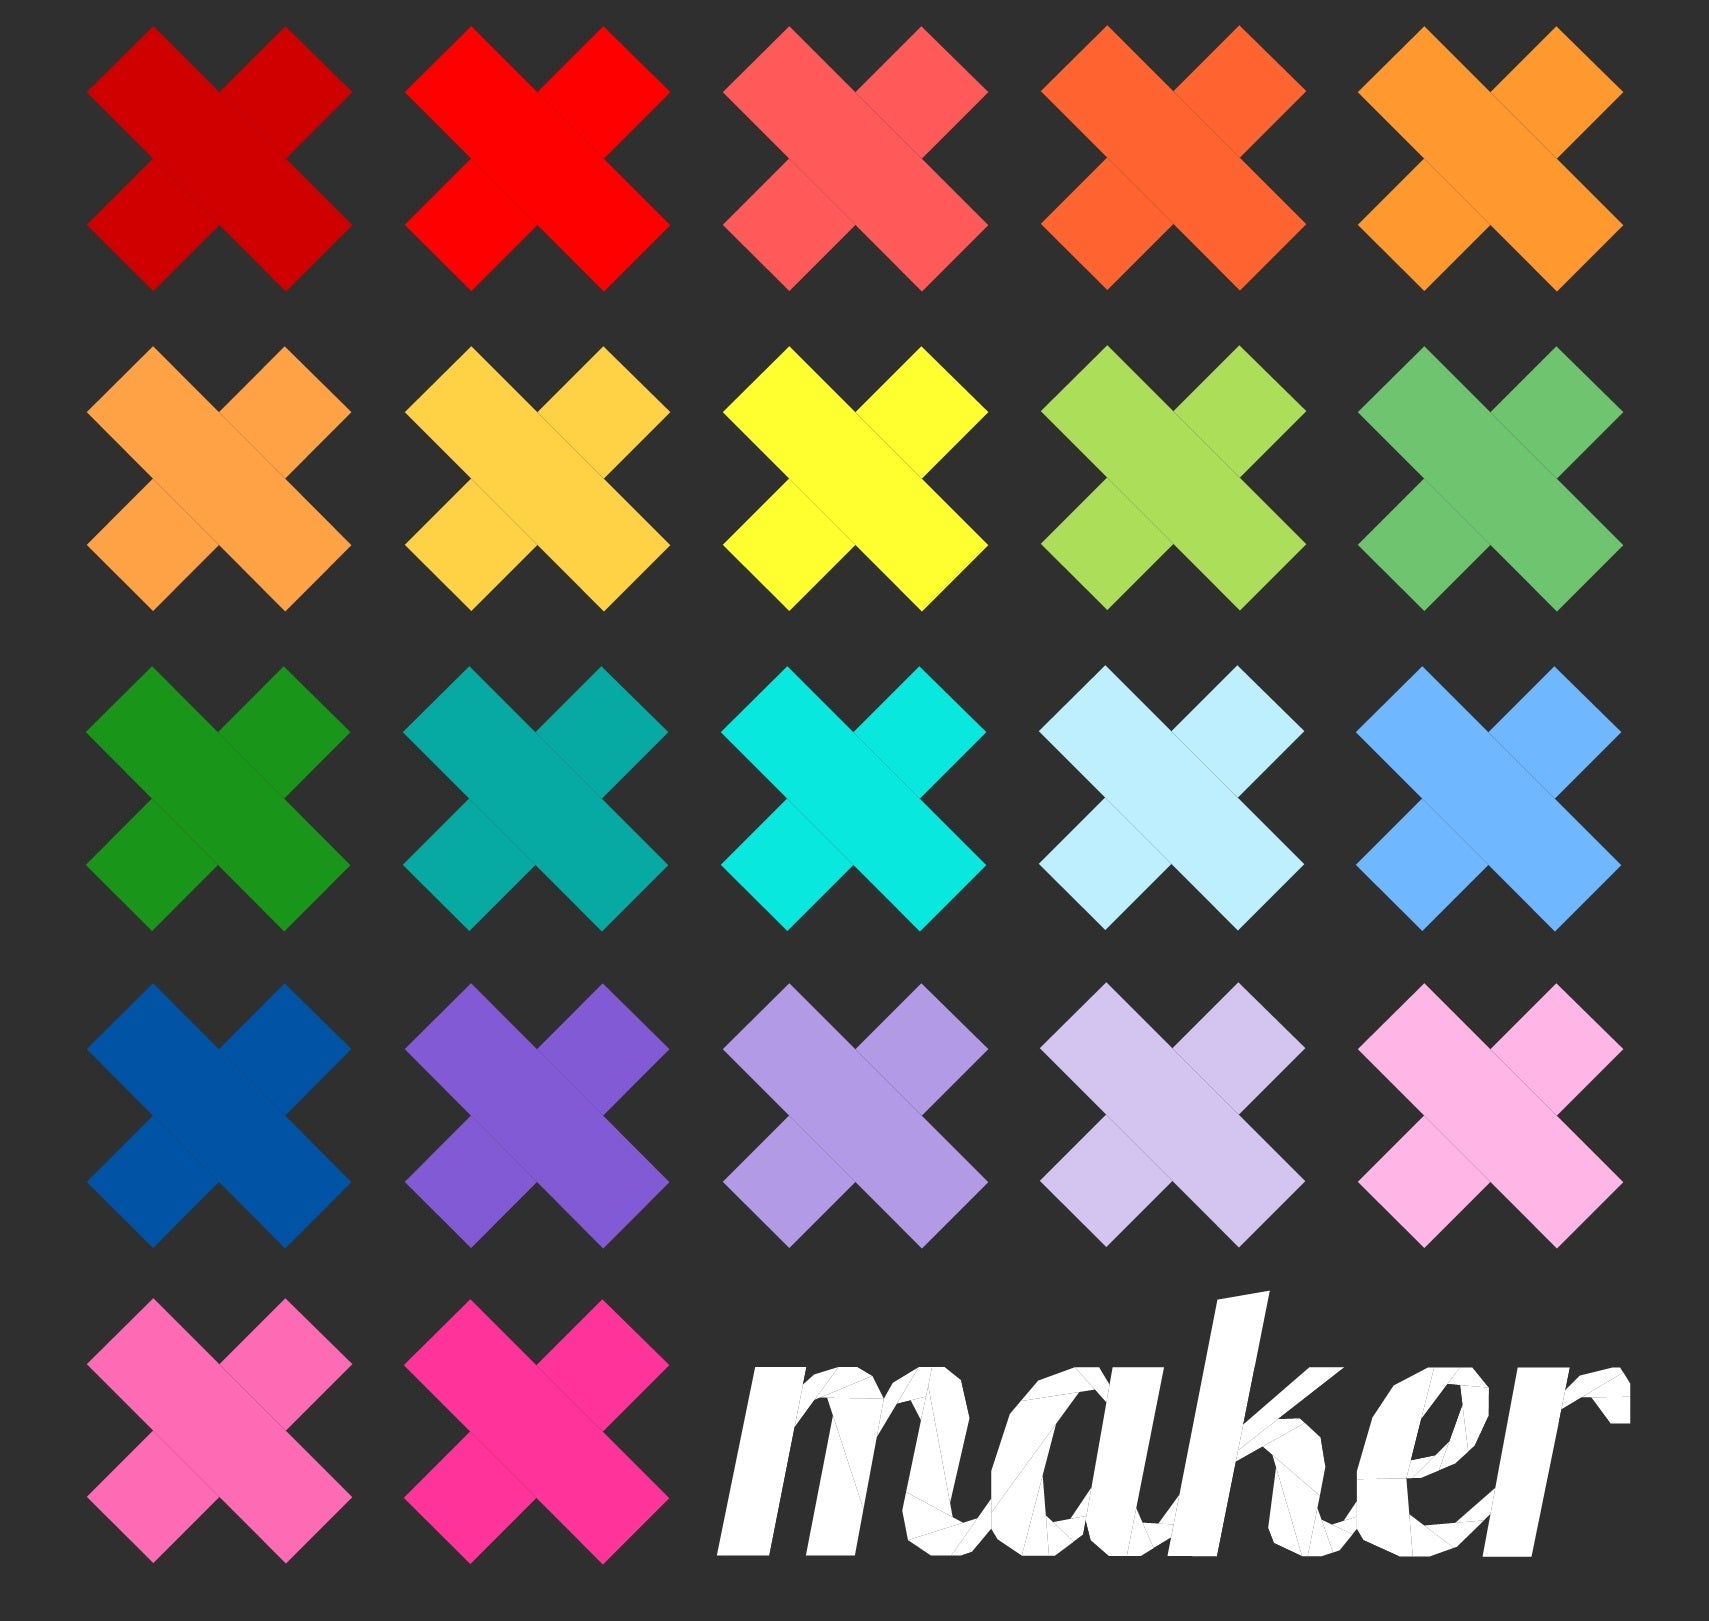 Maker at Heart Mini Quilt Paper pieced pattern black